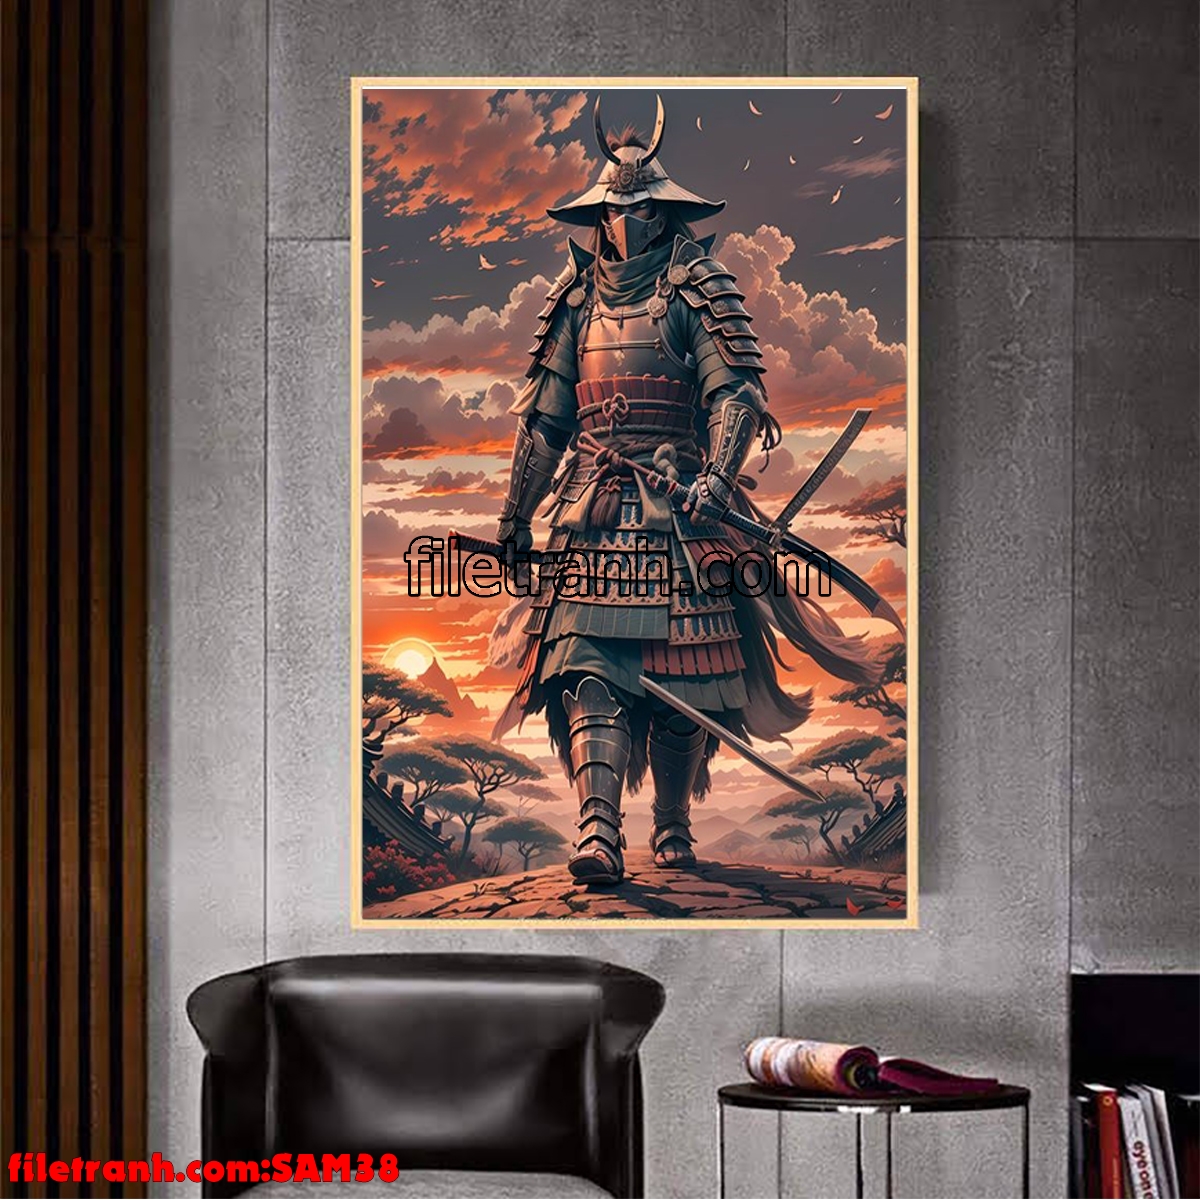 https://filetranh.com/samurai/file-tranh-samurai-vo-si-nhat-ban-sam38.html